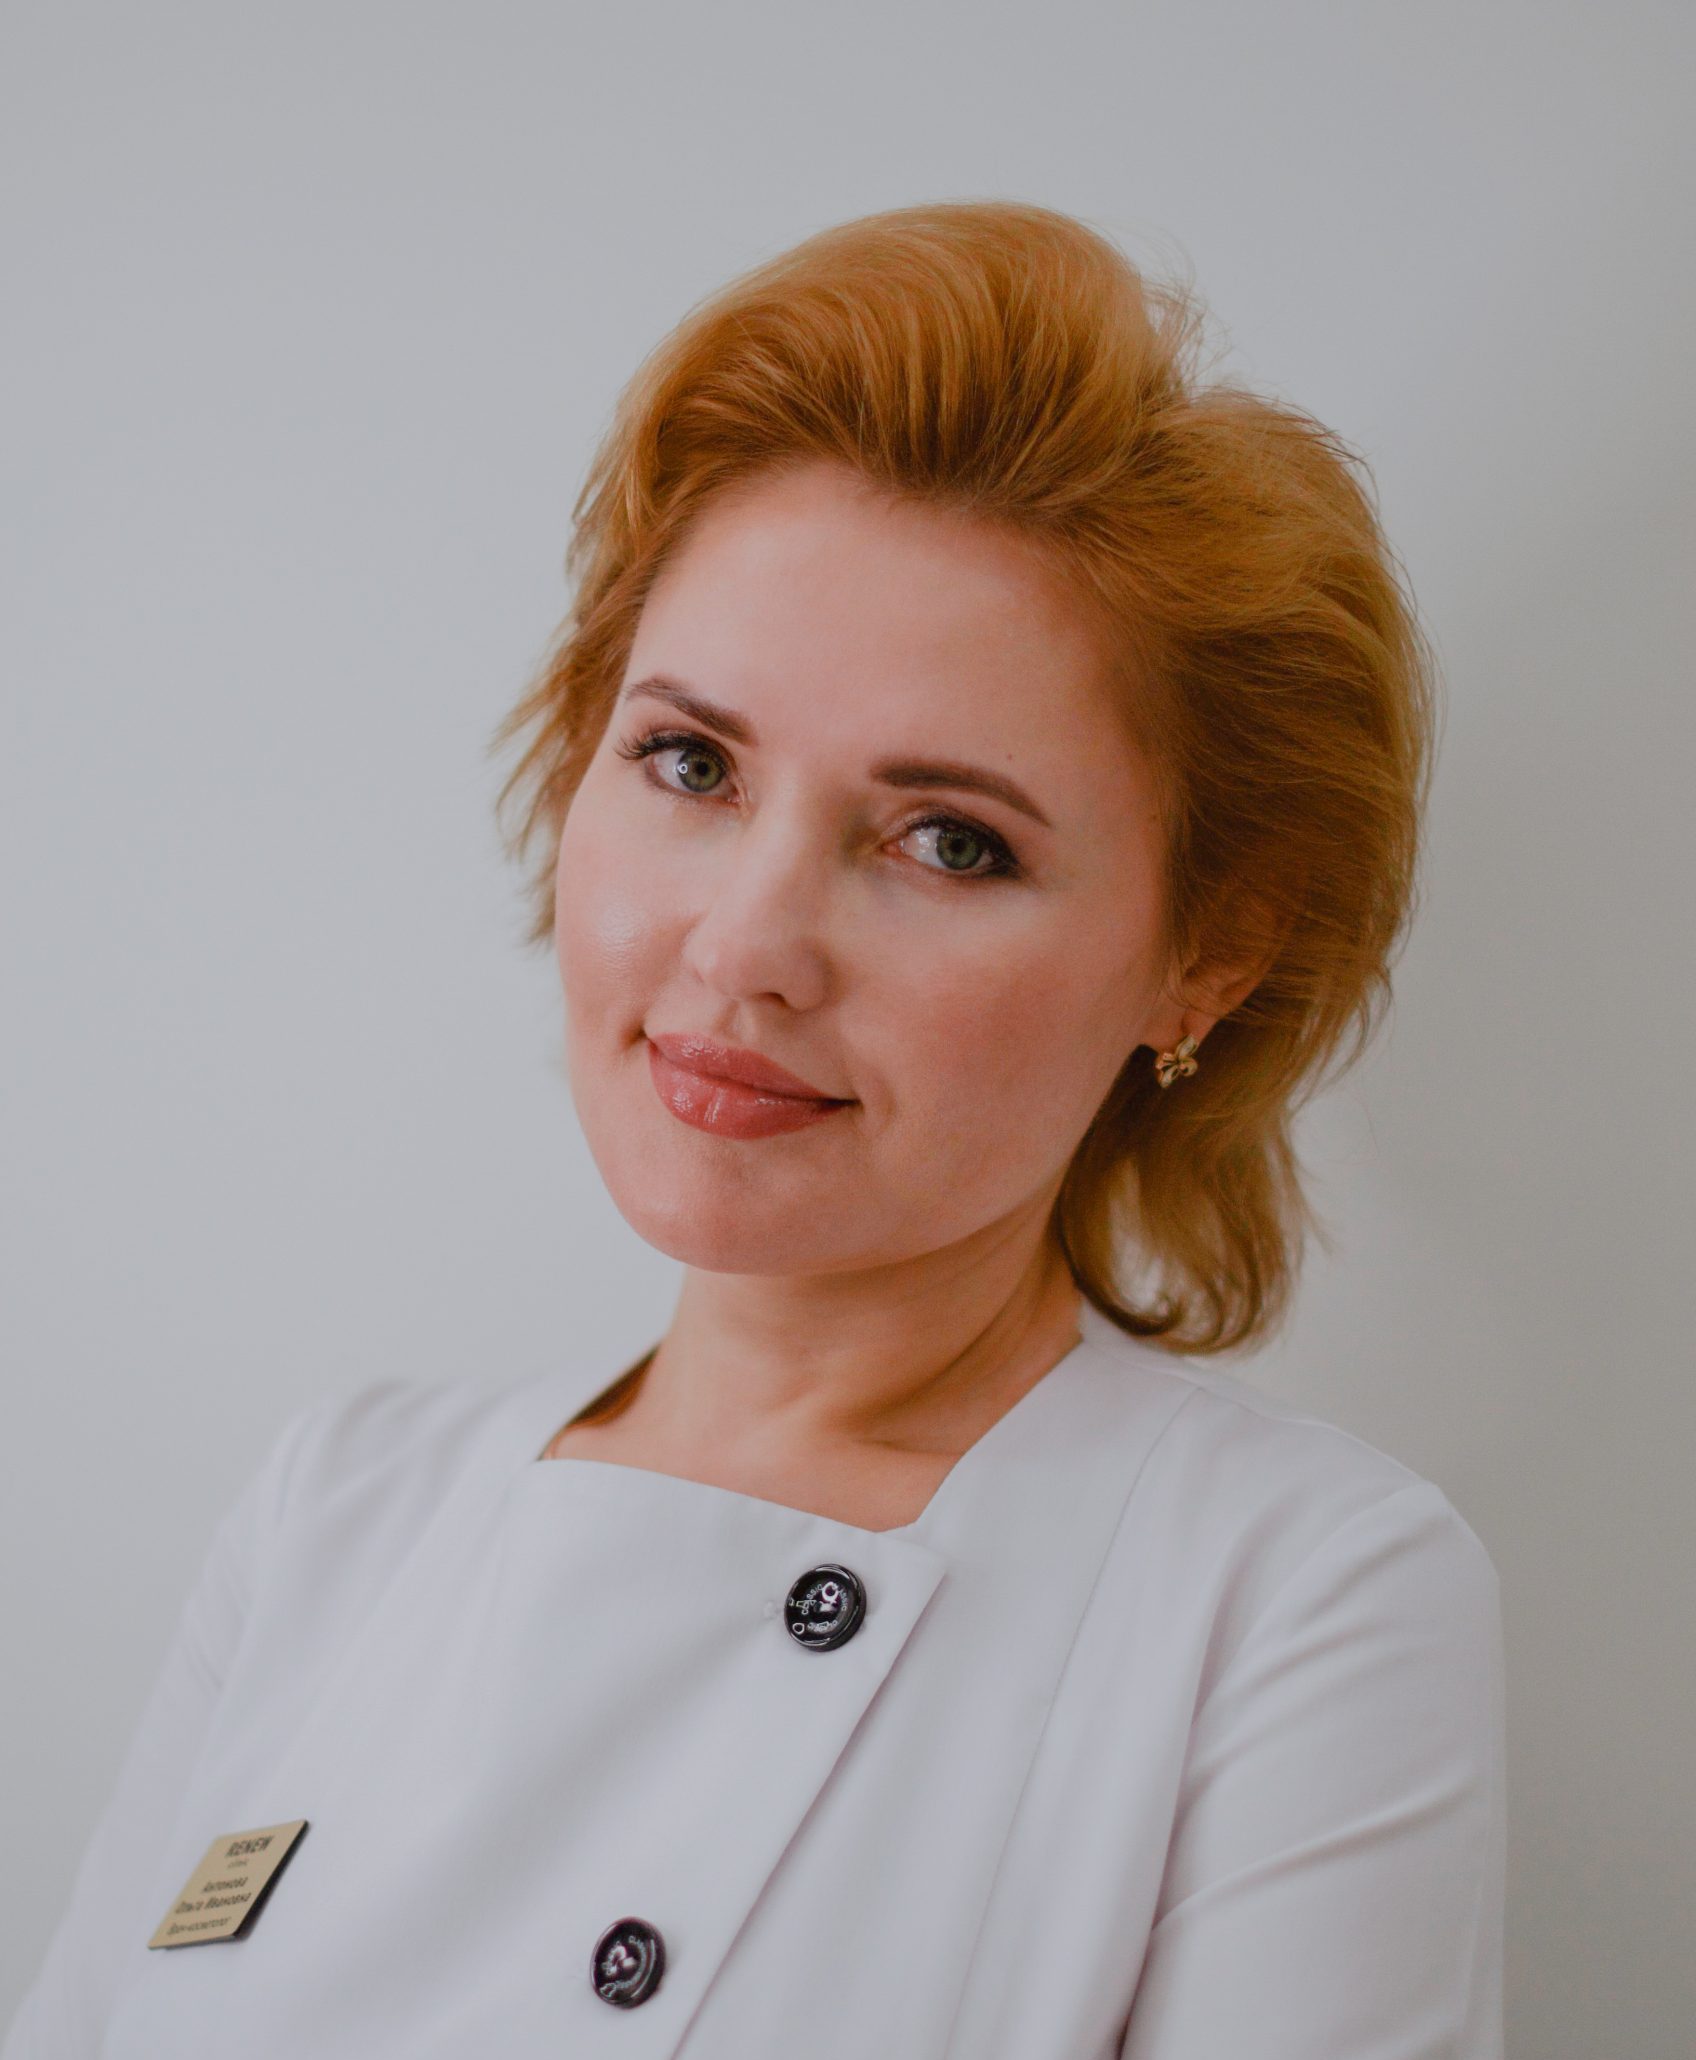 Ольга Антонова, врач дерматолог сети клиник Re:new 